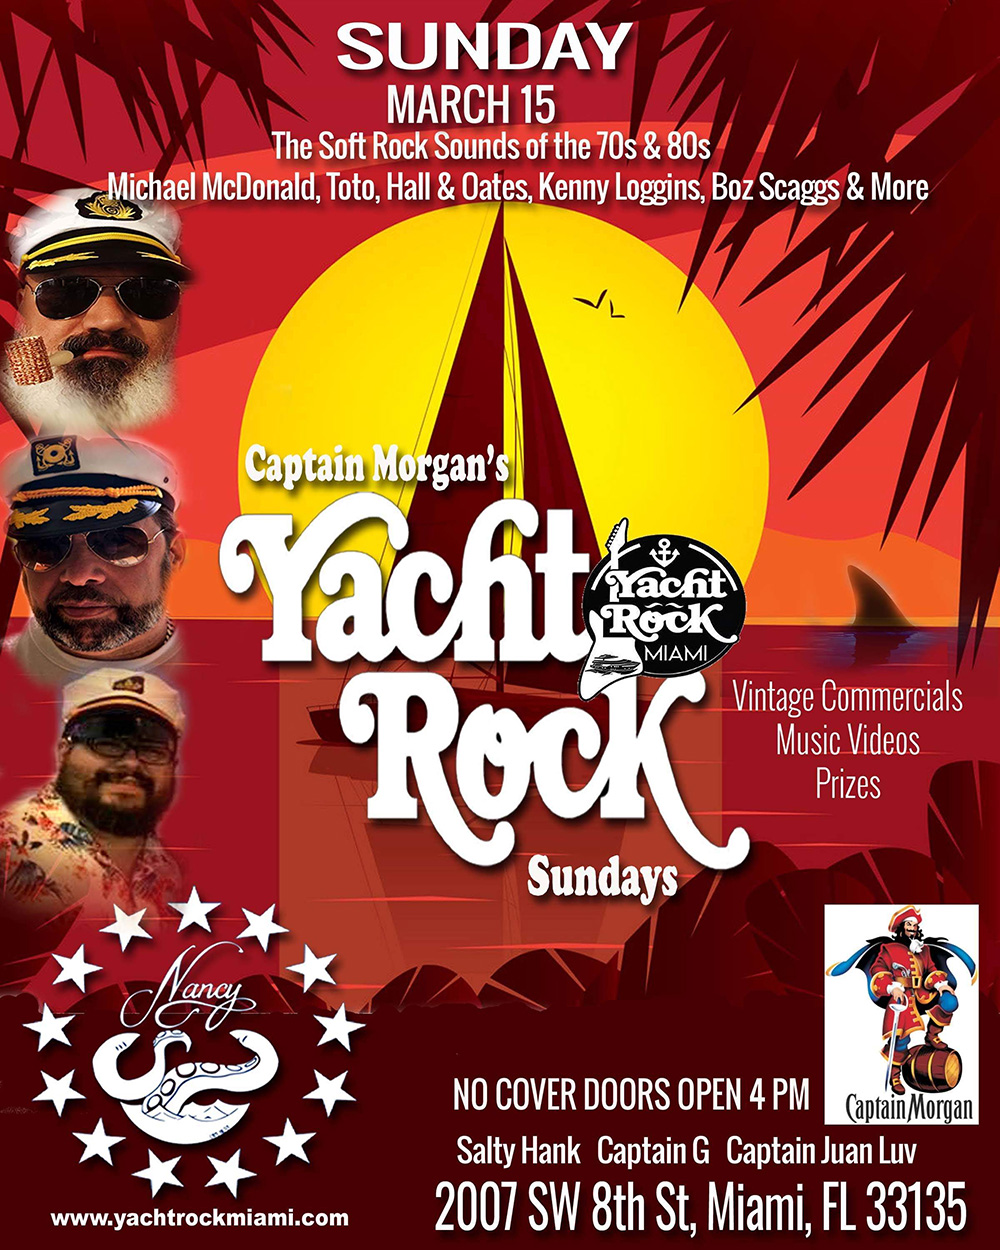 Captain Morgan's Yacht Rock Sundays at Bar Nancy!